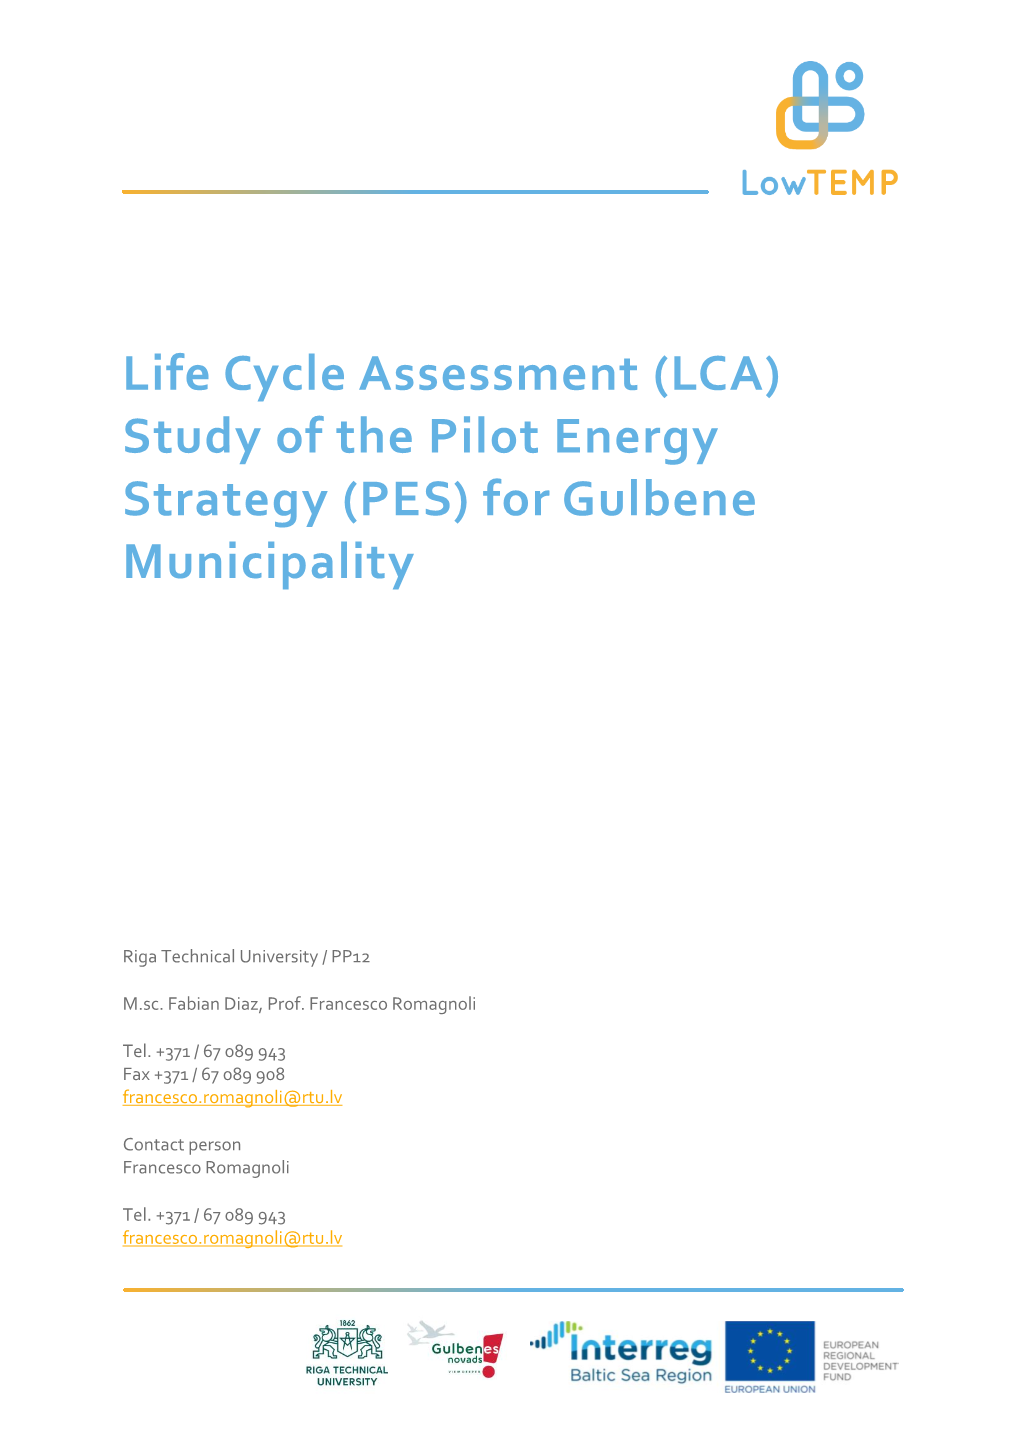 (LCA) Study of the Pilot Energy Strategy (PES) for Gulbene Municipality